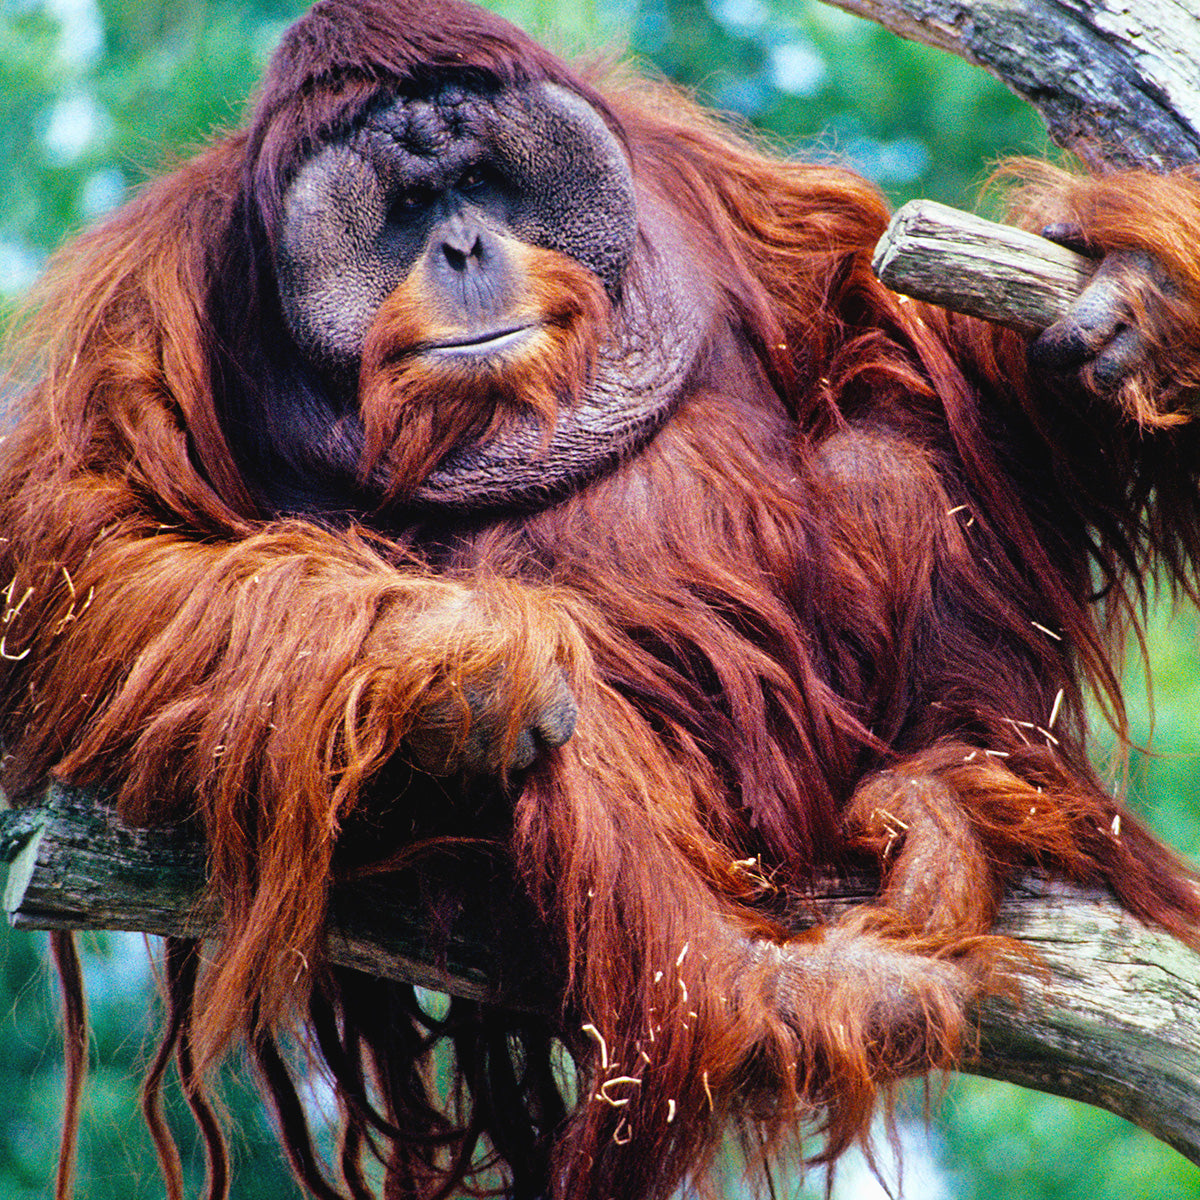 A close up photo of an orangutan sitting in a tree